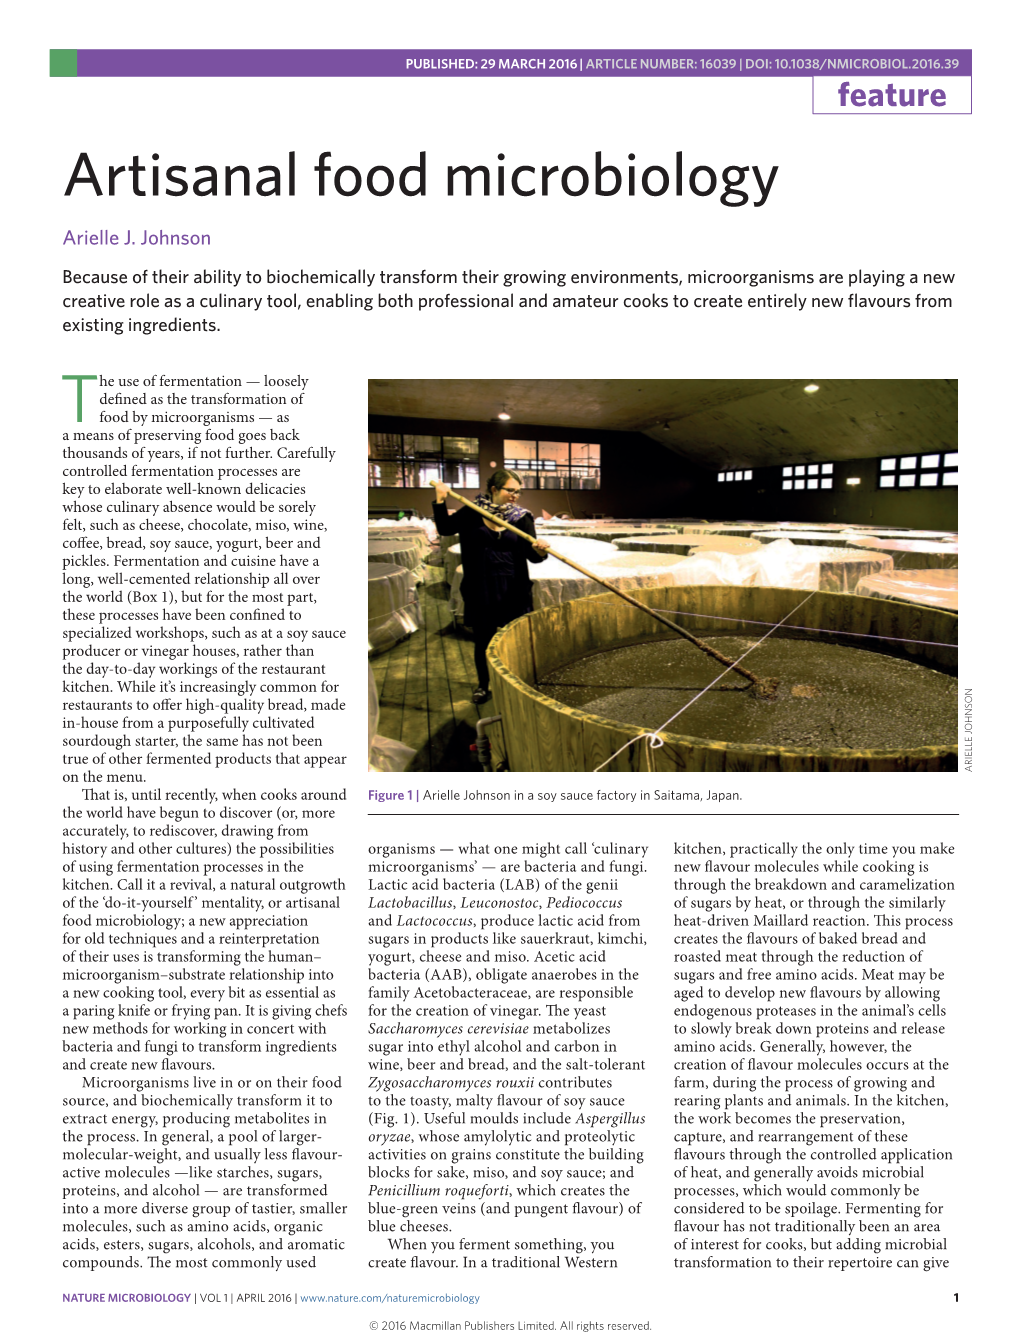 Artisanal Food Microbiology Arielle J